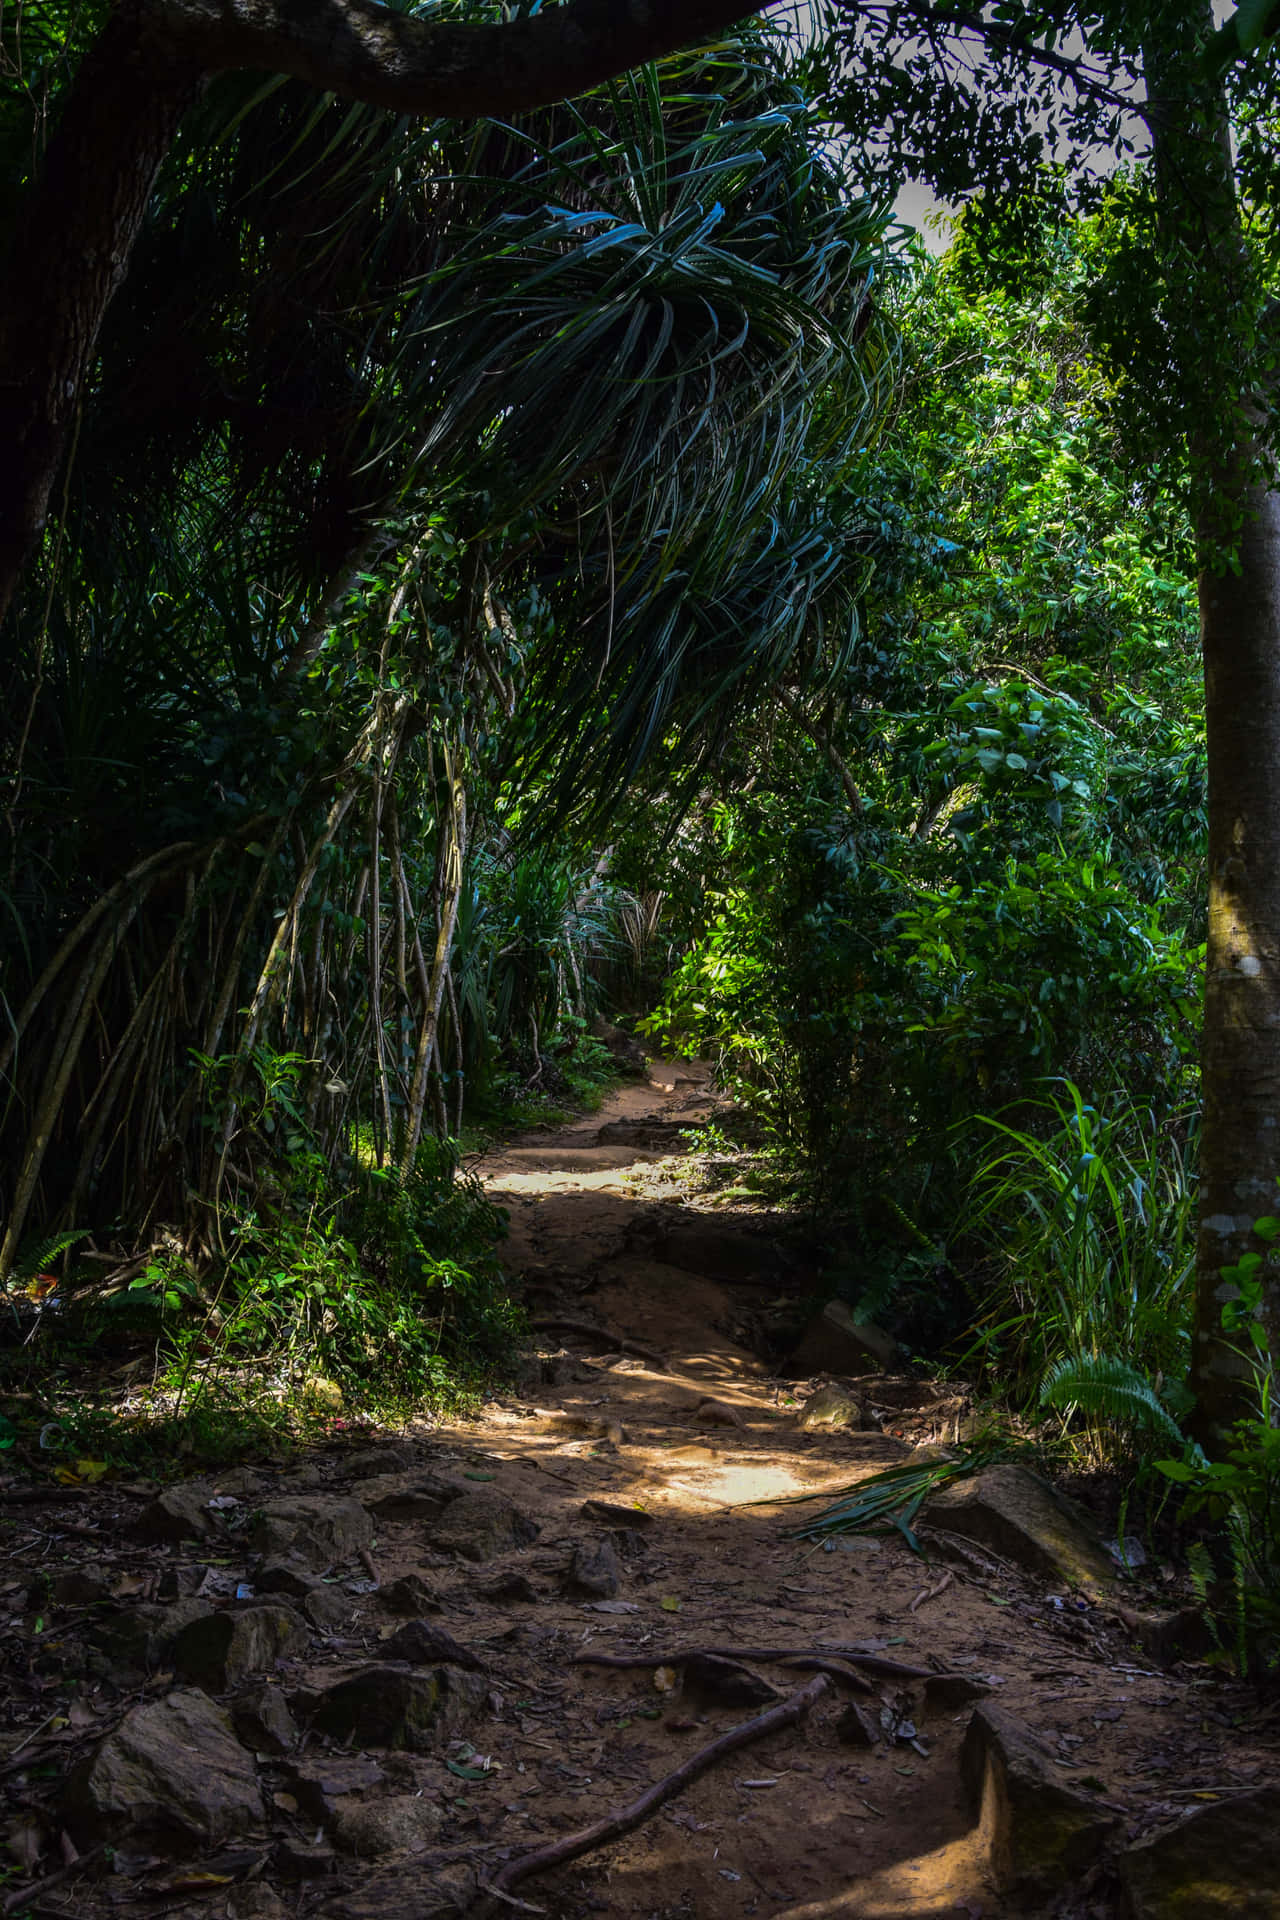 Vibrant Jungle Canopy - Nature's Heartbeat